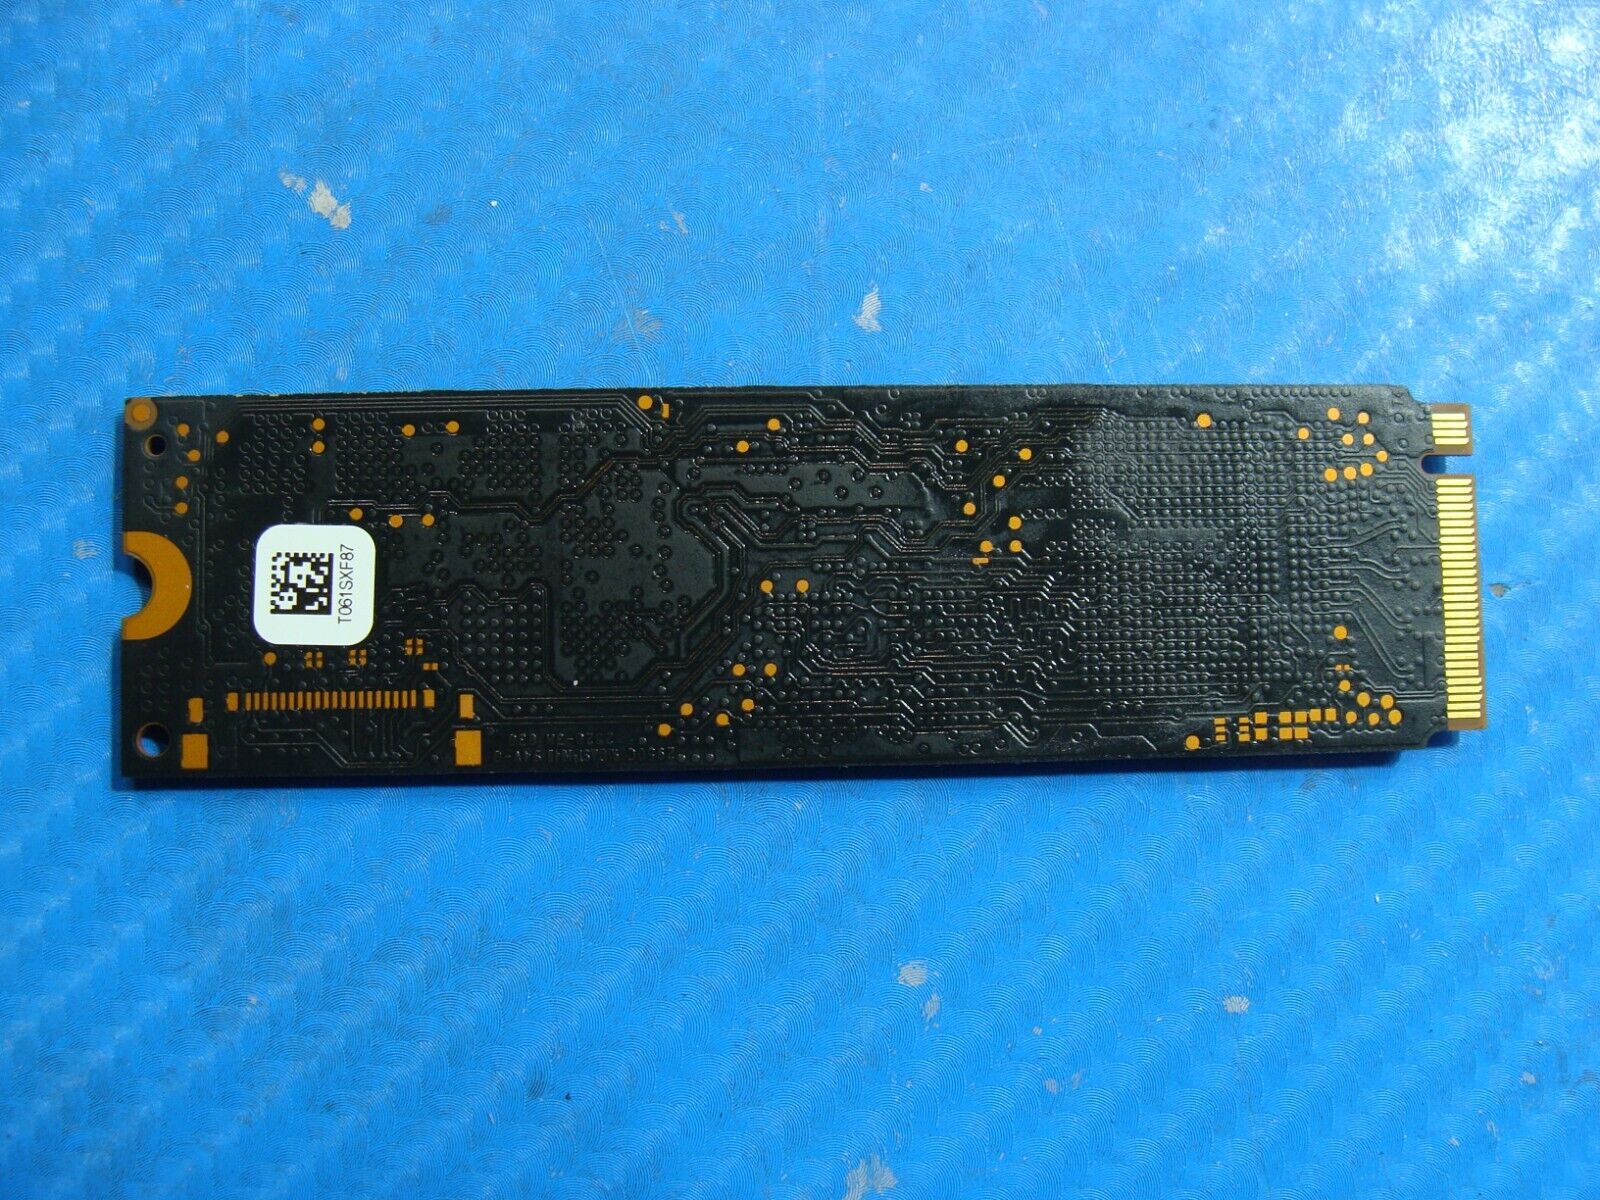 Lenovo T490s Micron 512GB M.2 NVMe SSD Solid State Drive MTFDHBA512TDV-1AZ15ABLA